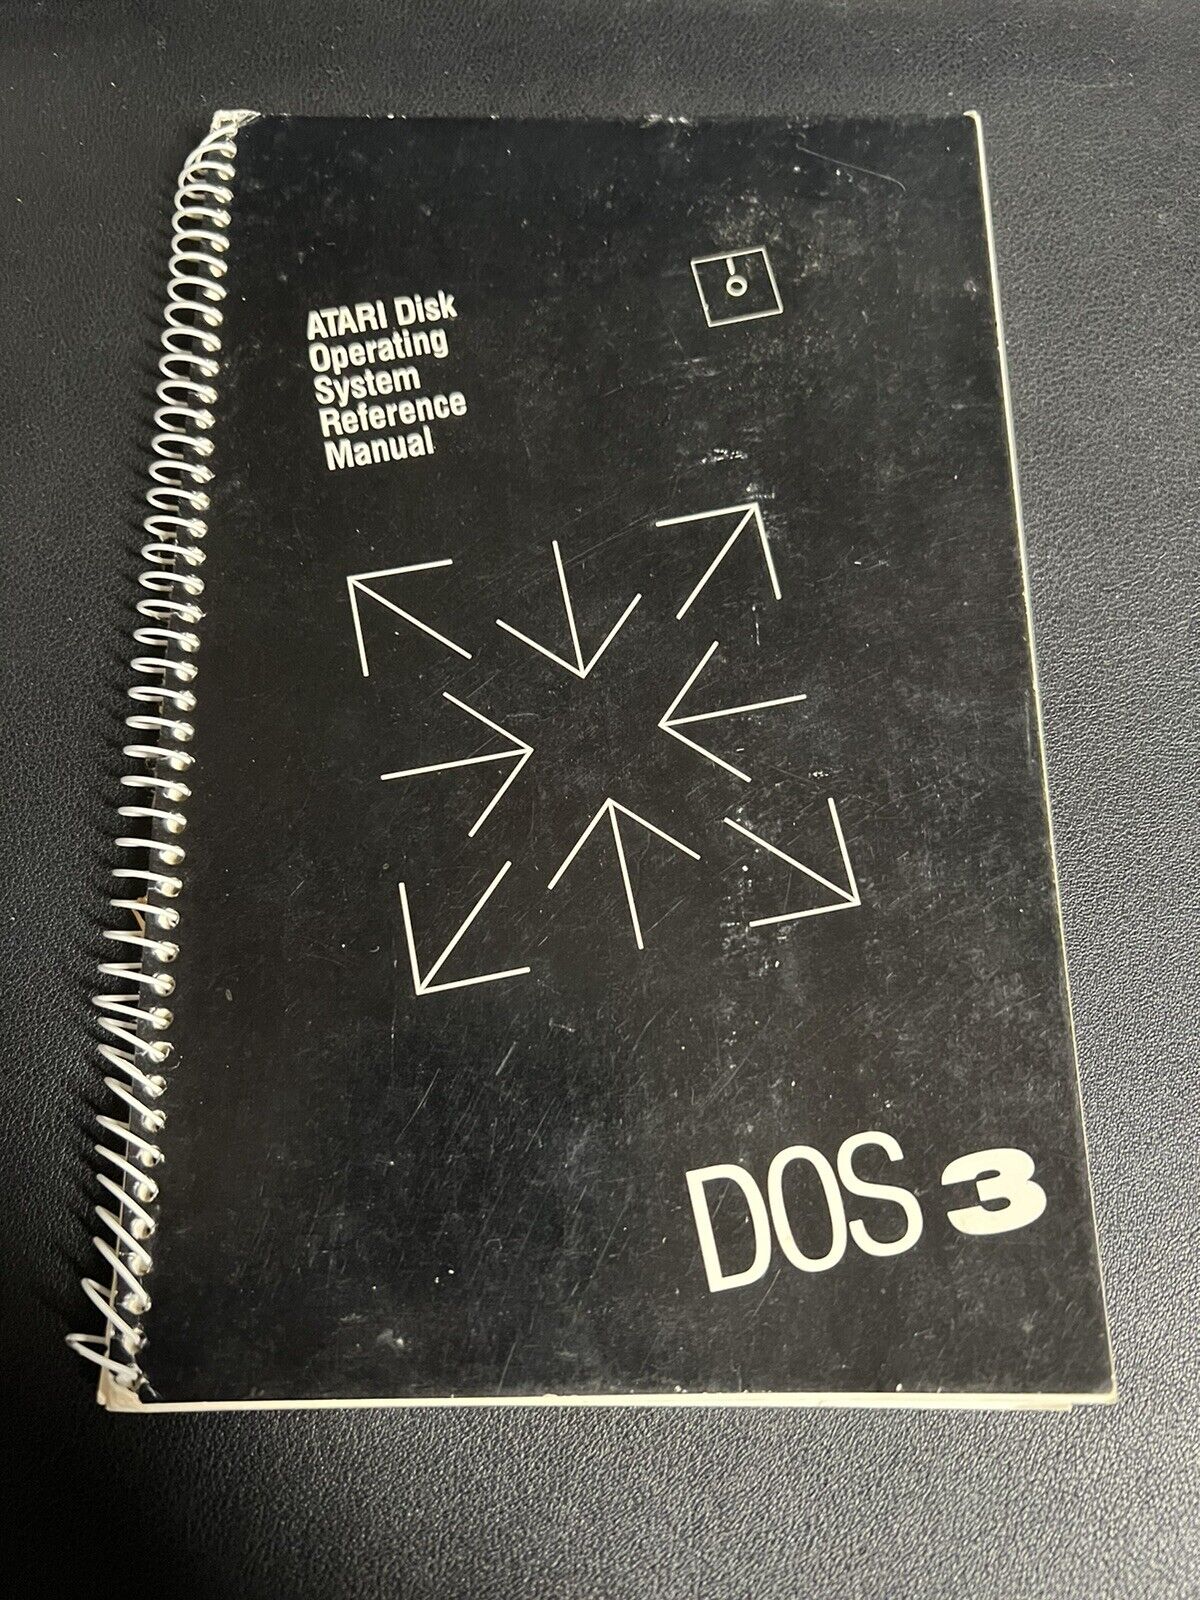 ATARI Disk Operating System III Reference Manual DOS 3 Spiral Bound Vintage